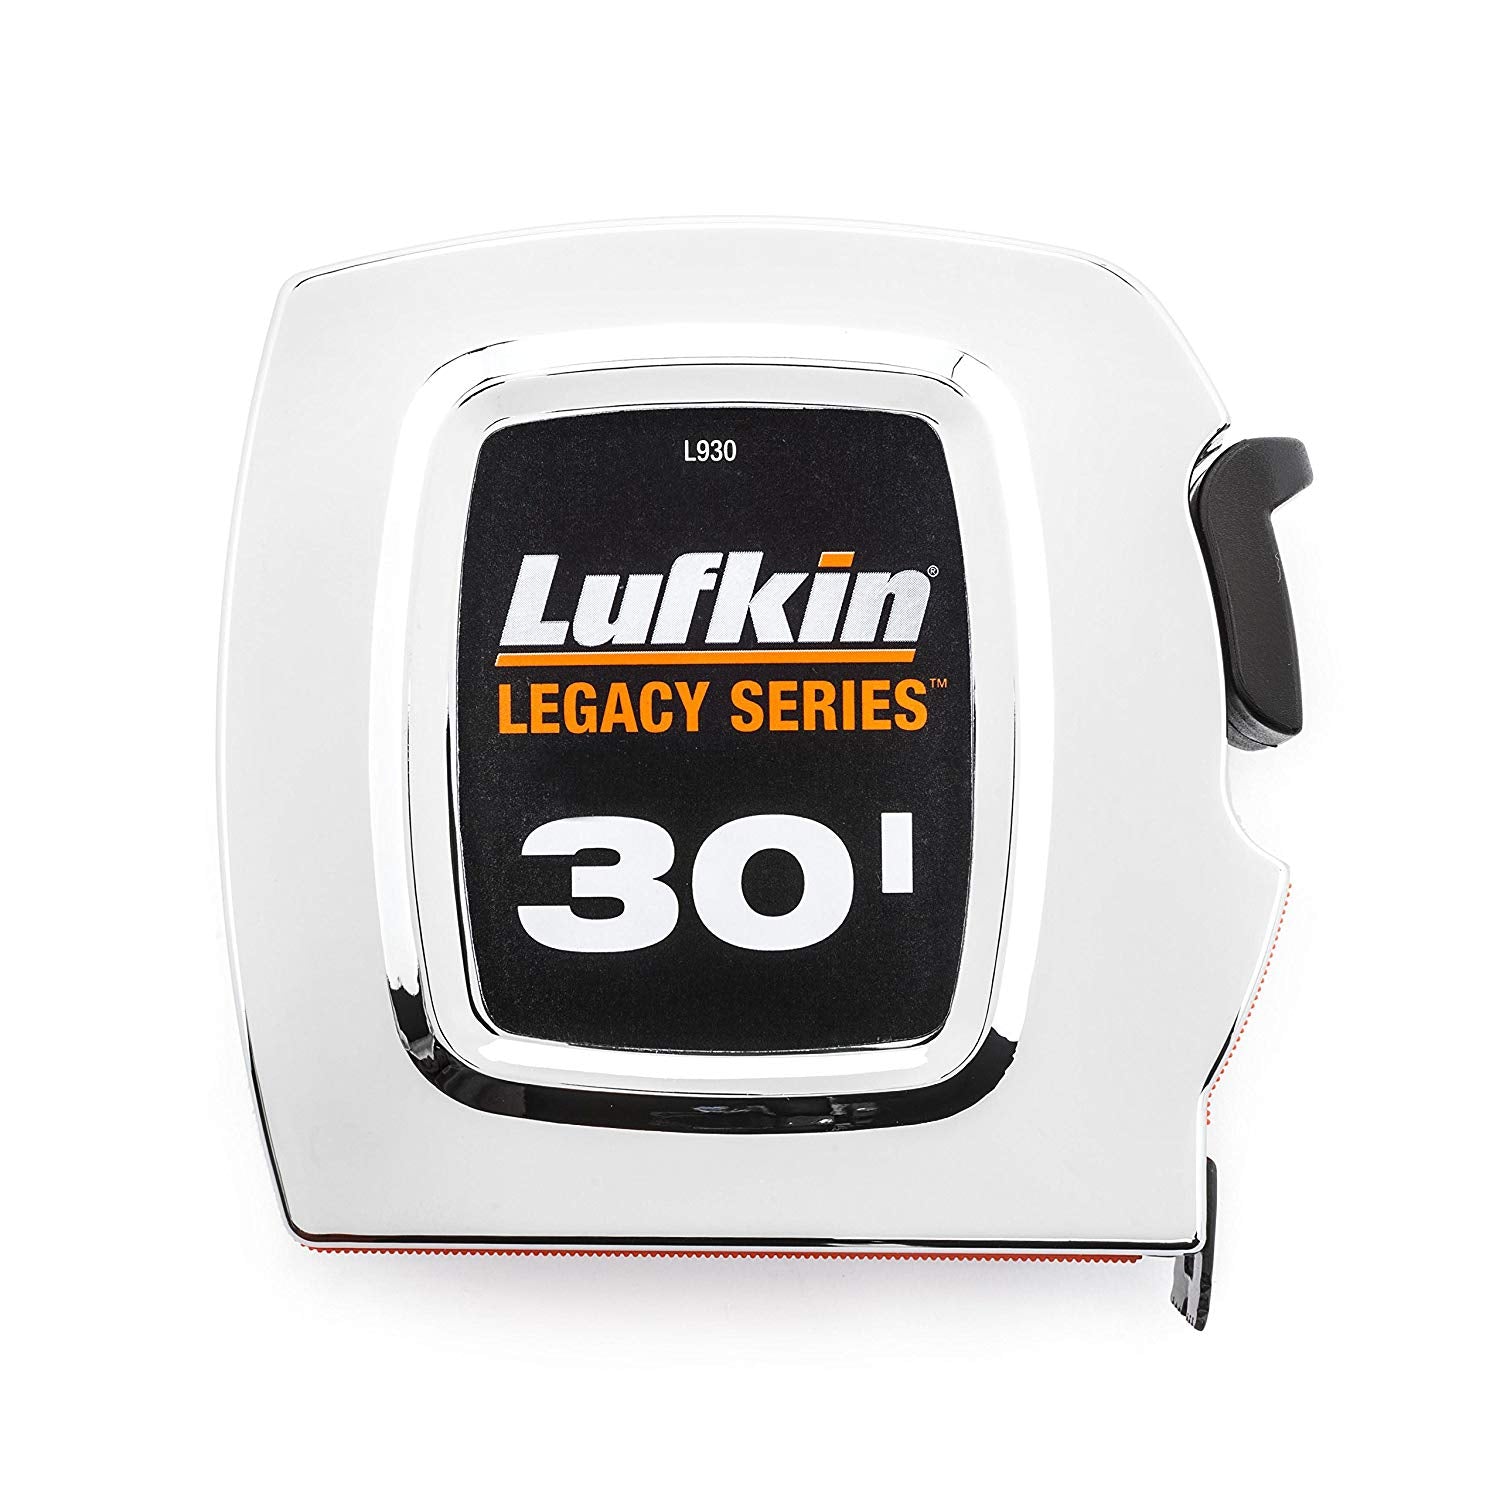 Lufkin L930 1" x 30' Legacy Series Tape Measure